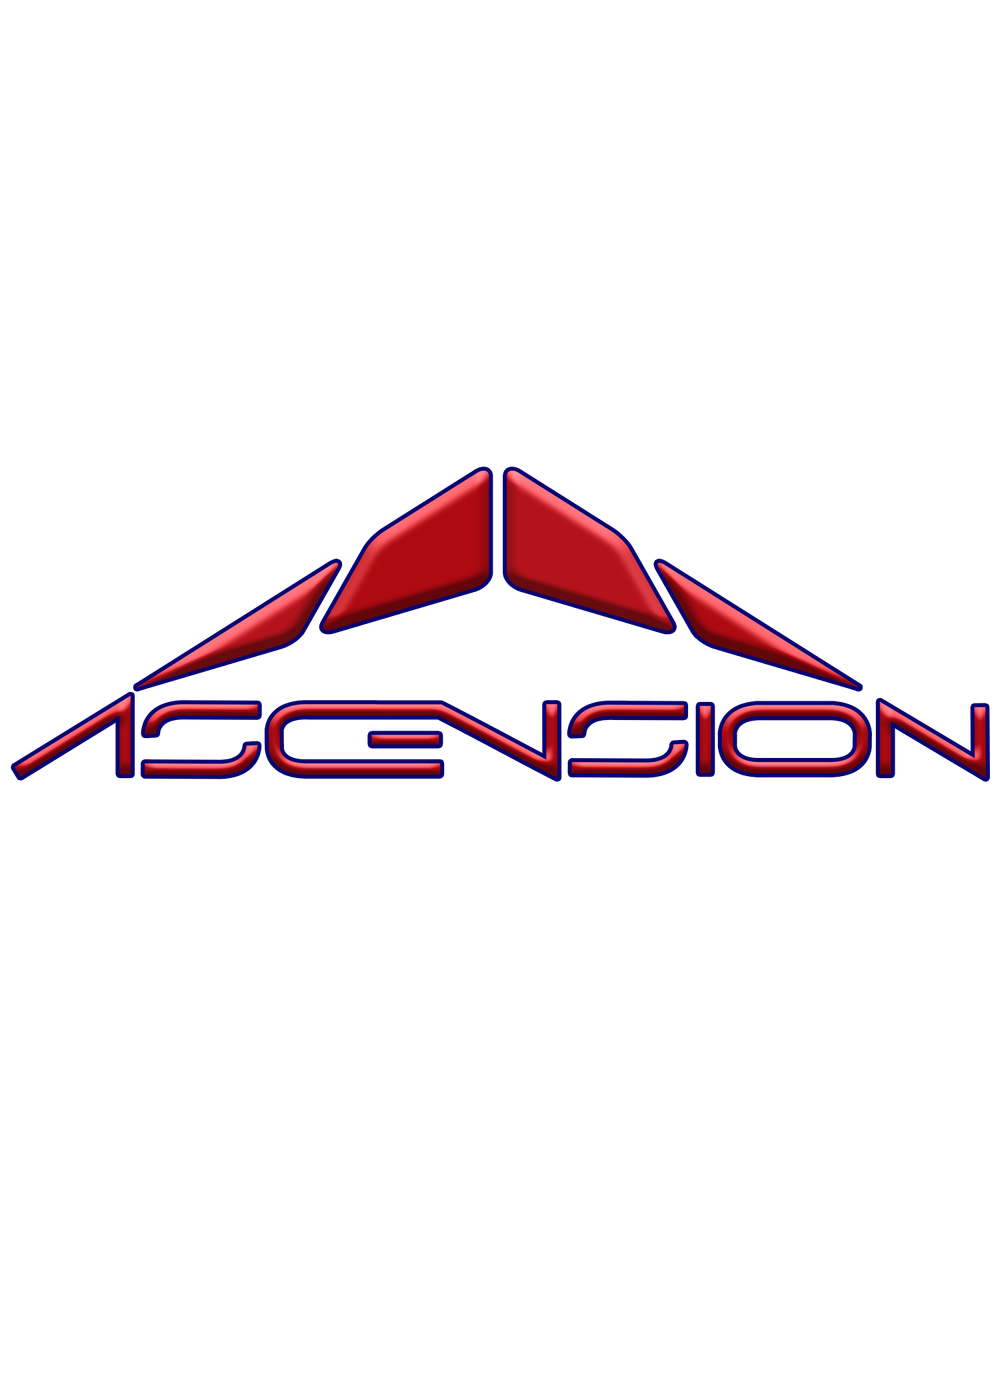 dj ascension logo